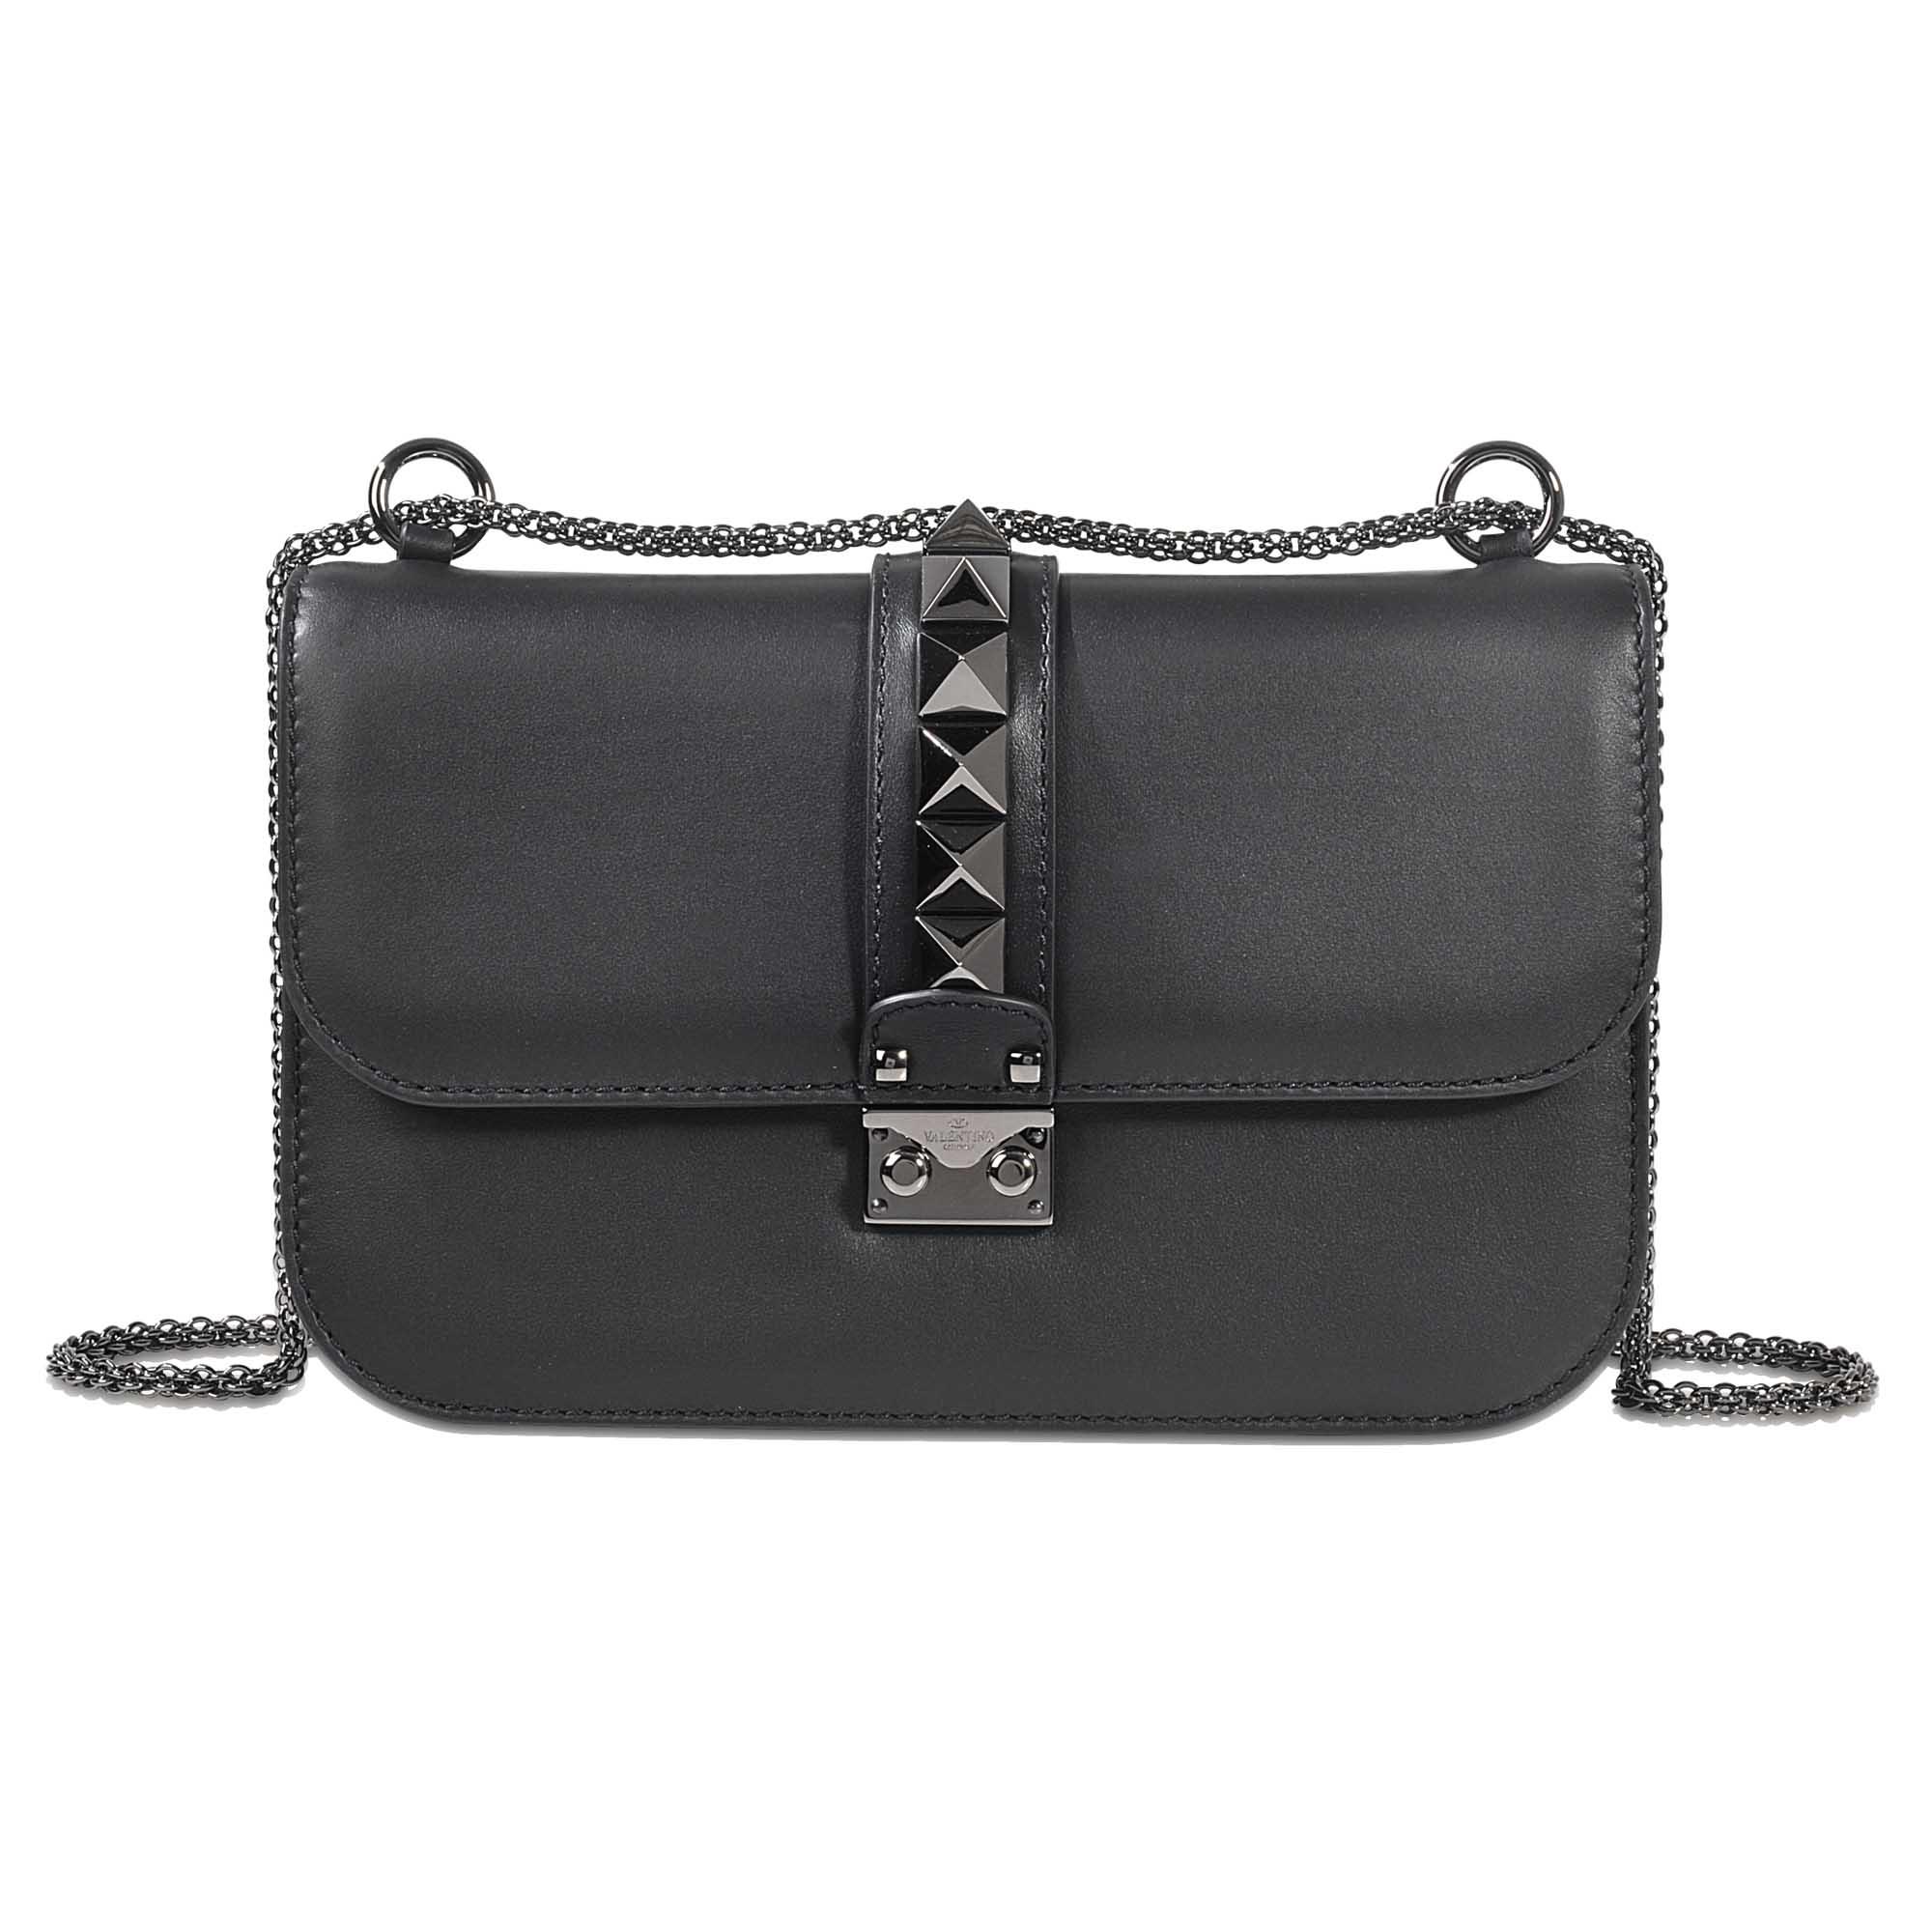 Lyst - Valentino Rocklock Medium Leather Crossbody Bag in Black - Save 19%